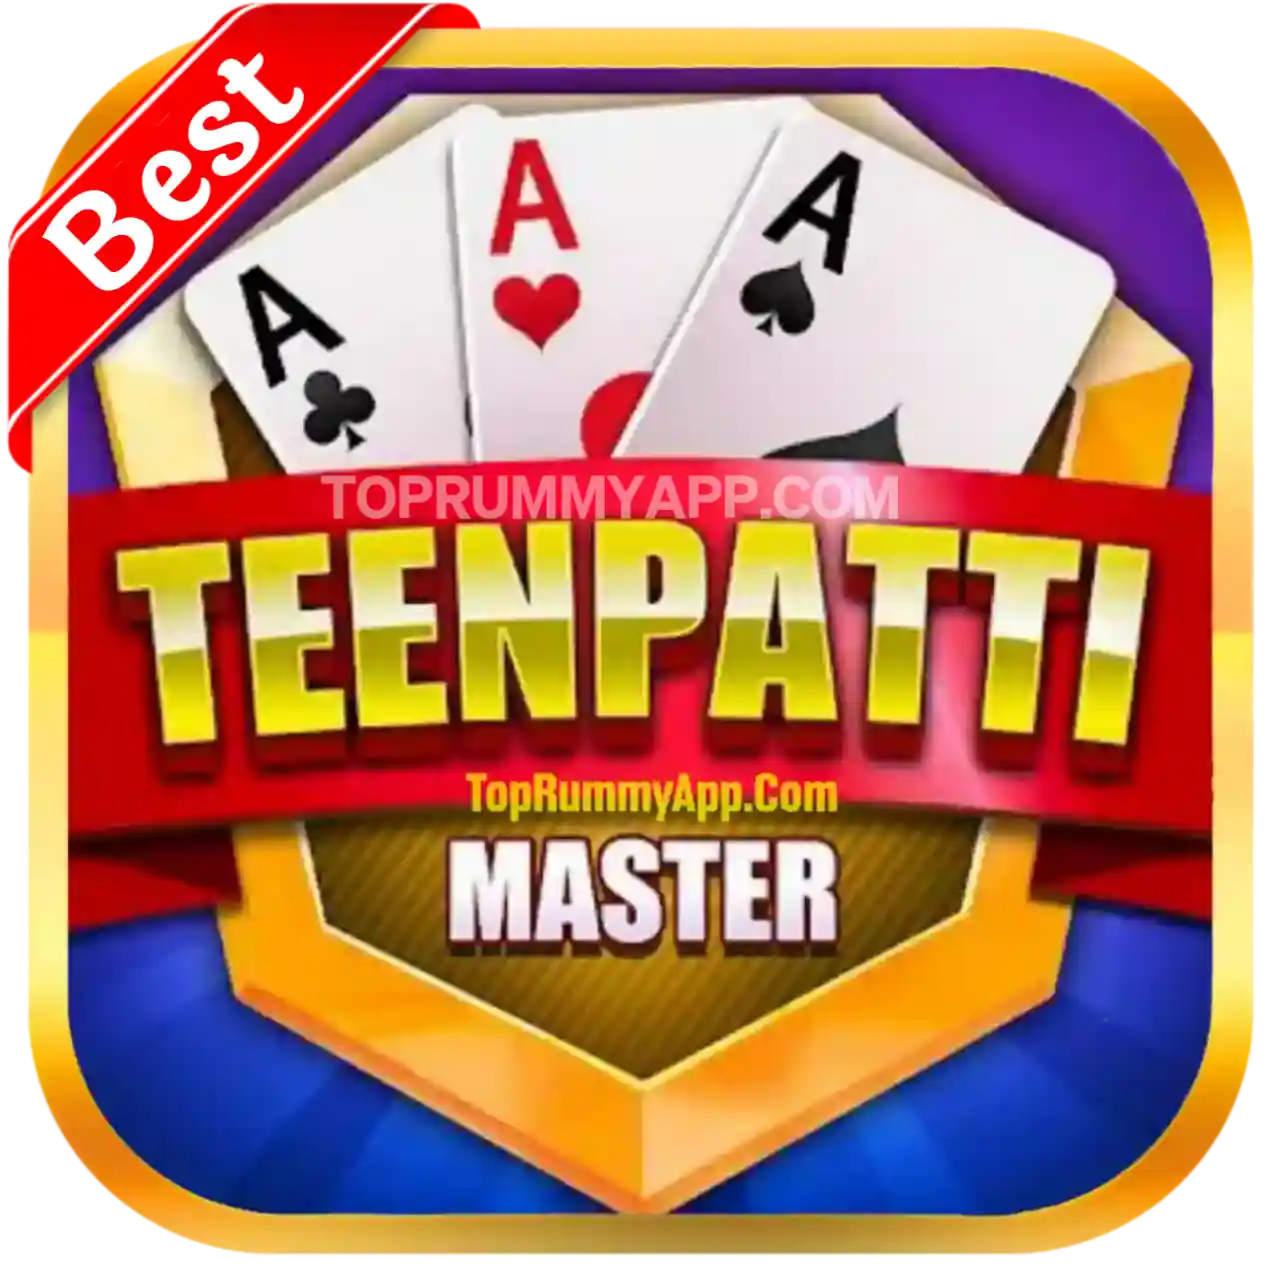 Teen Patti Master App Download - Teen Patti Master Apk Download